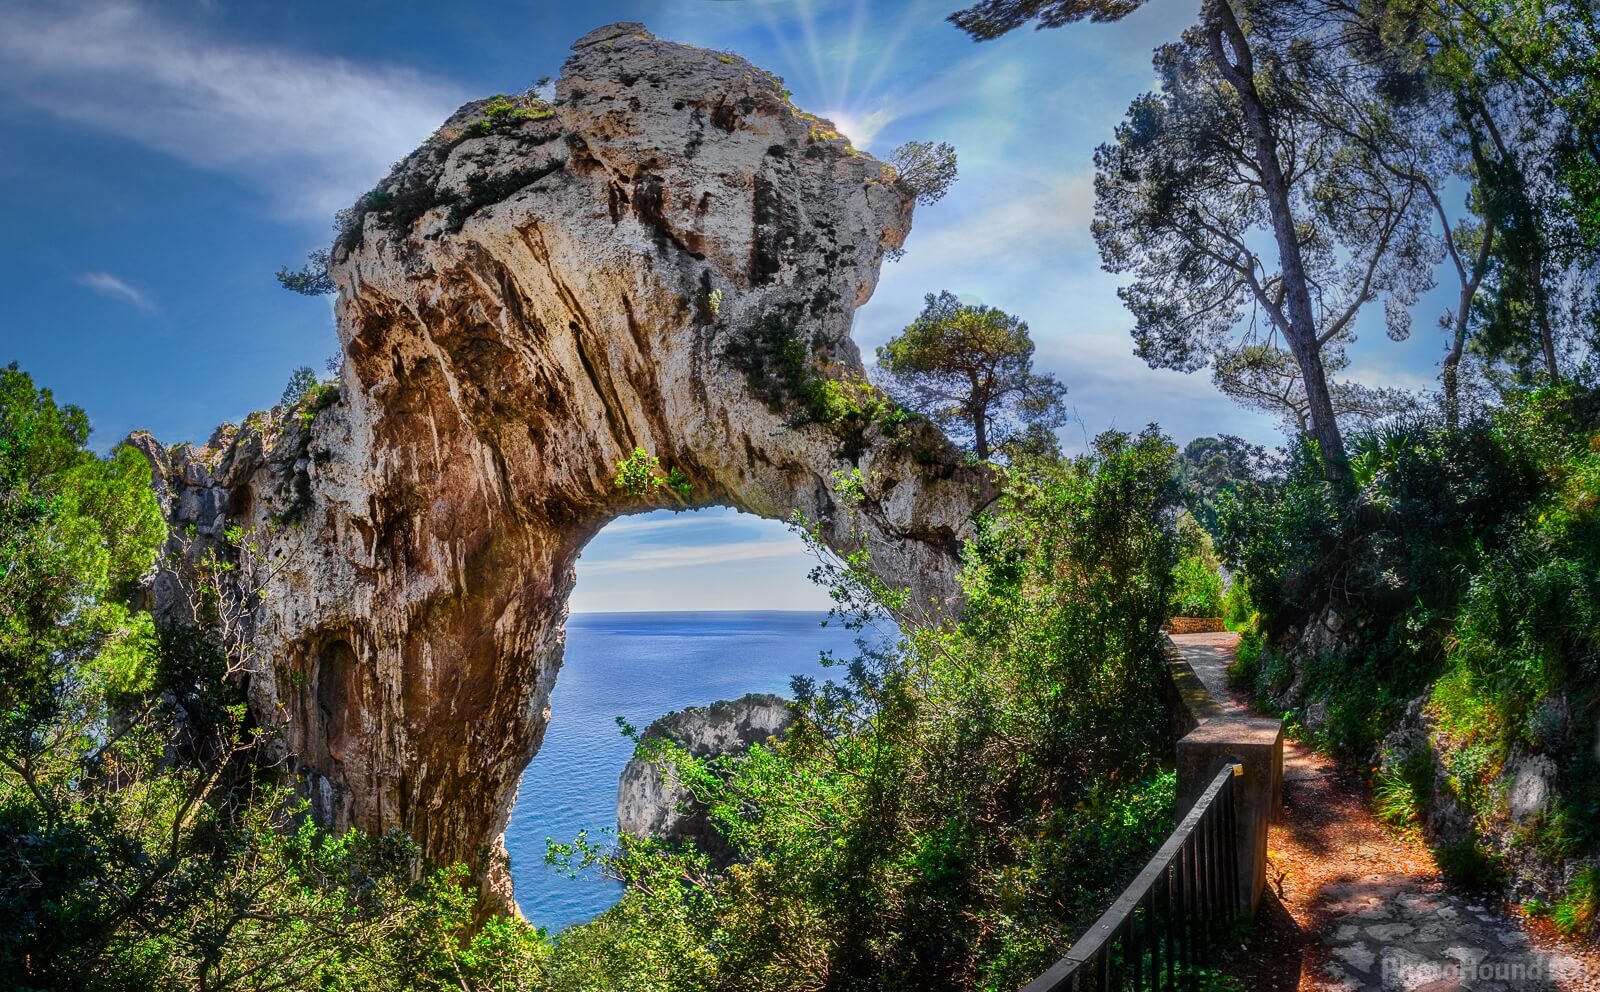 Arco Naturale Capri - Travel Through Italy